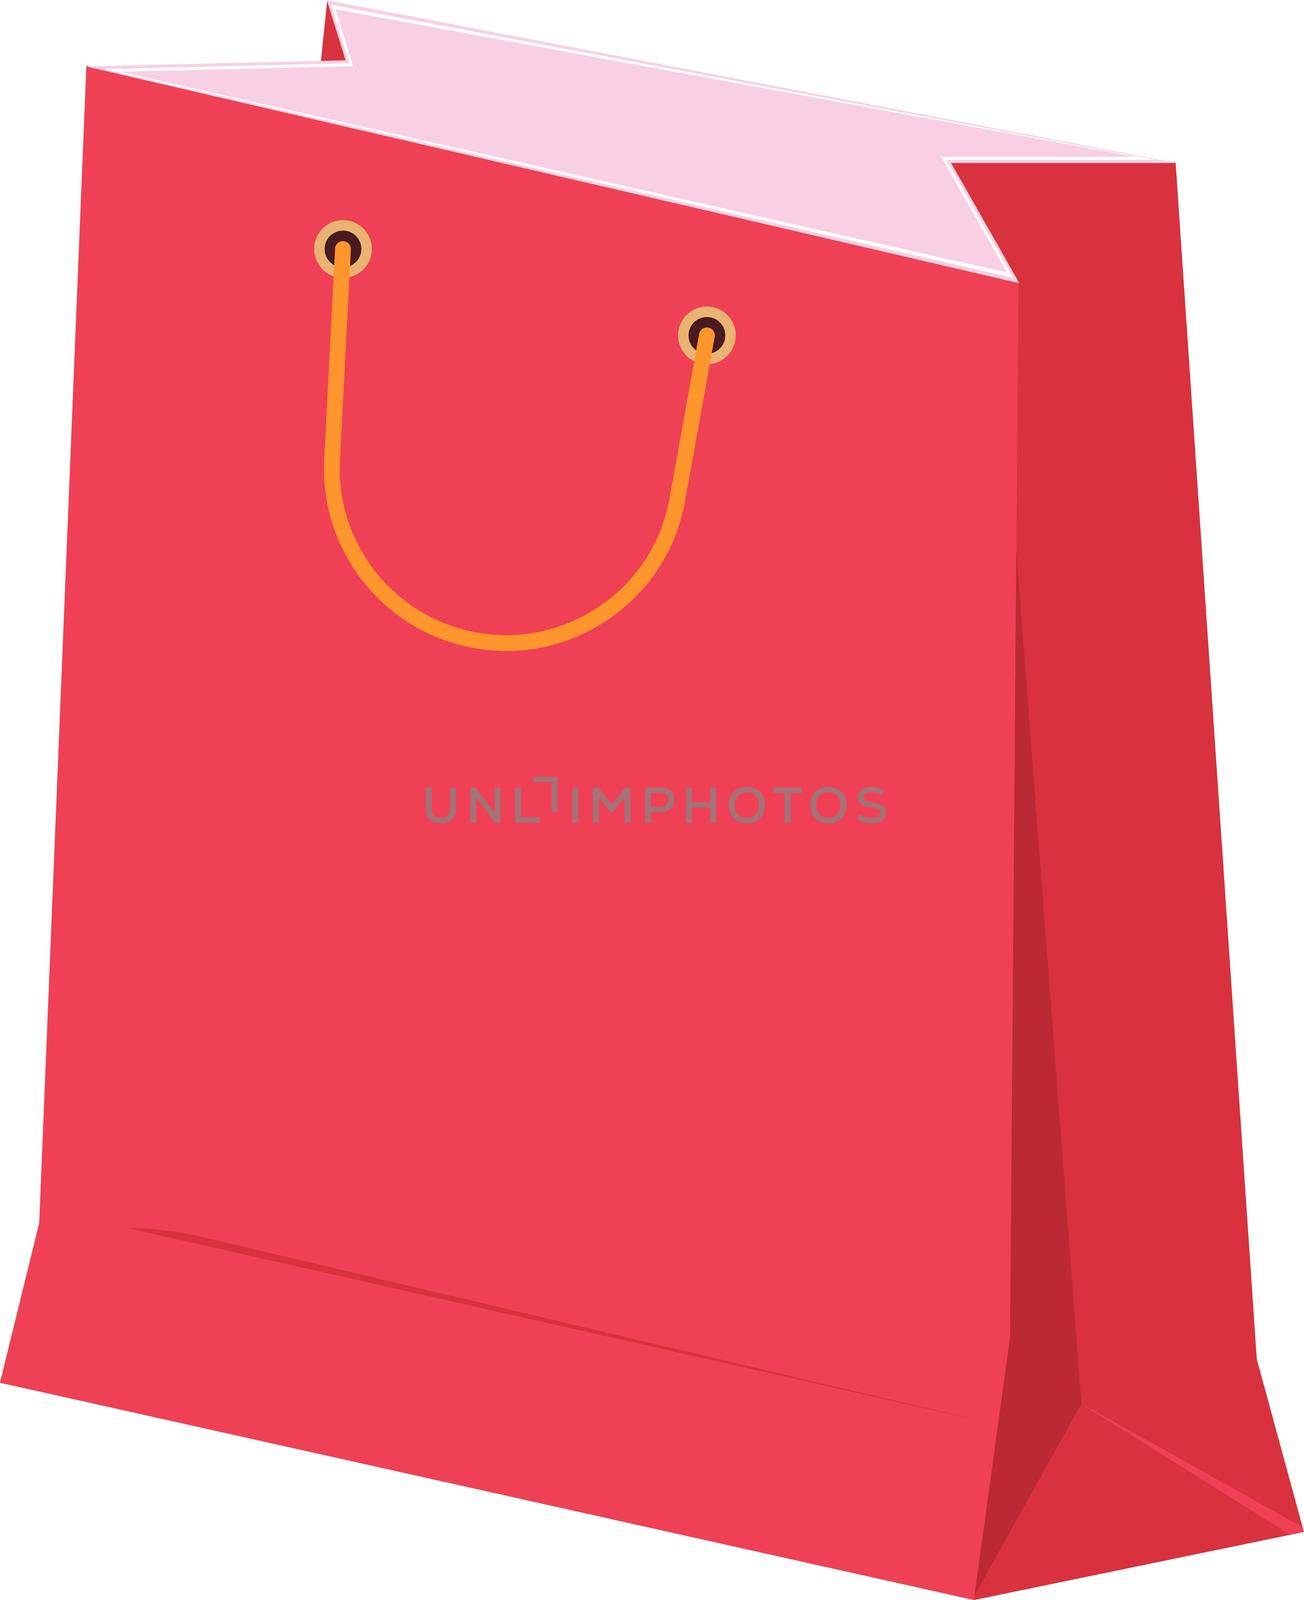 Shopping bags, illustration, vector on white background.